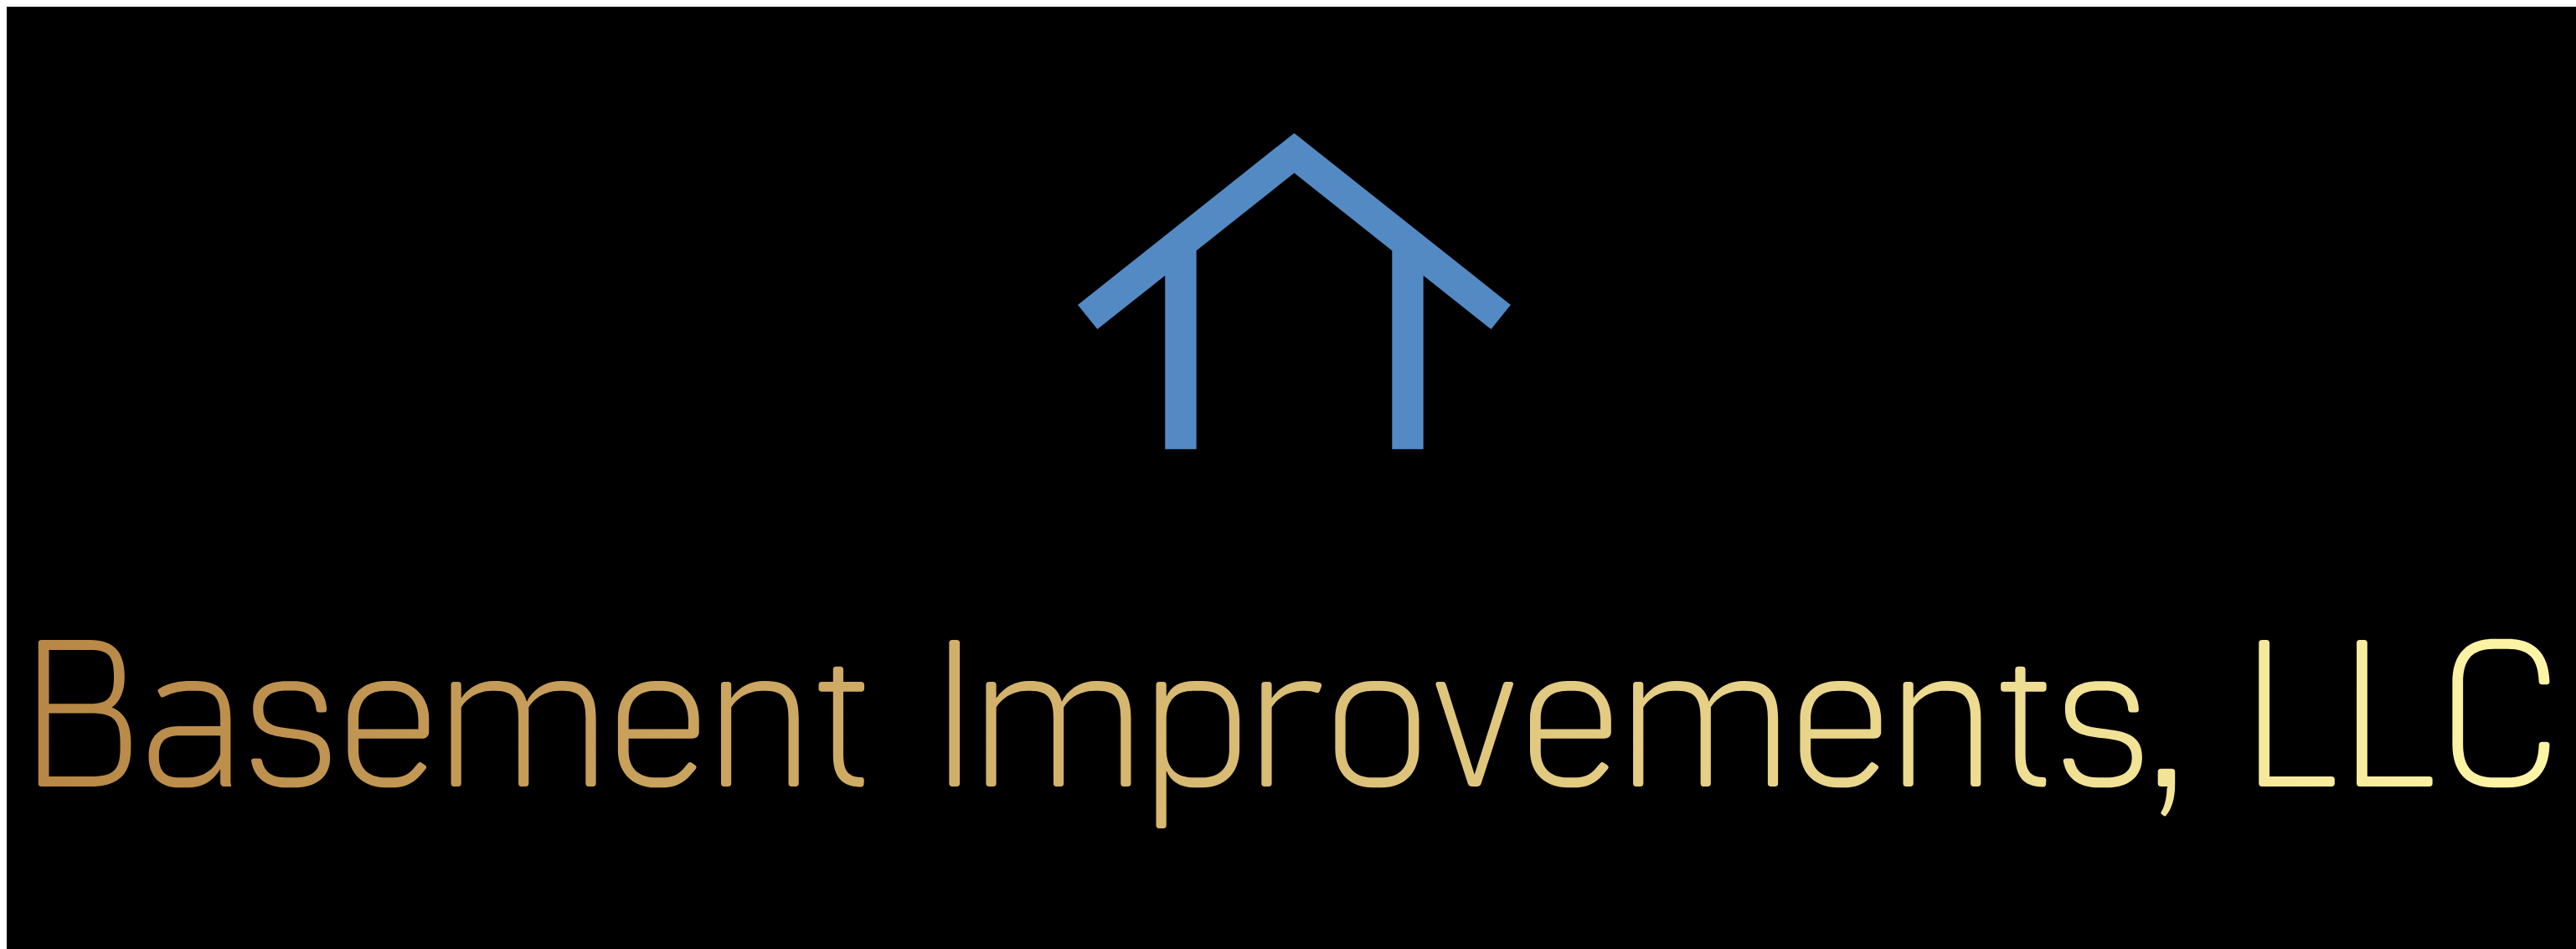 Basement Improvements, LLC Logo